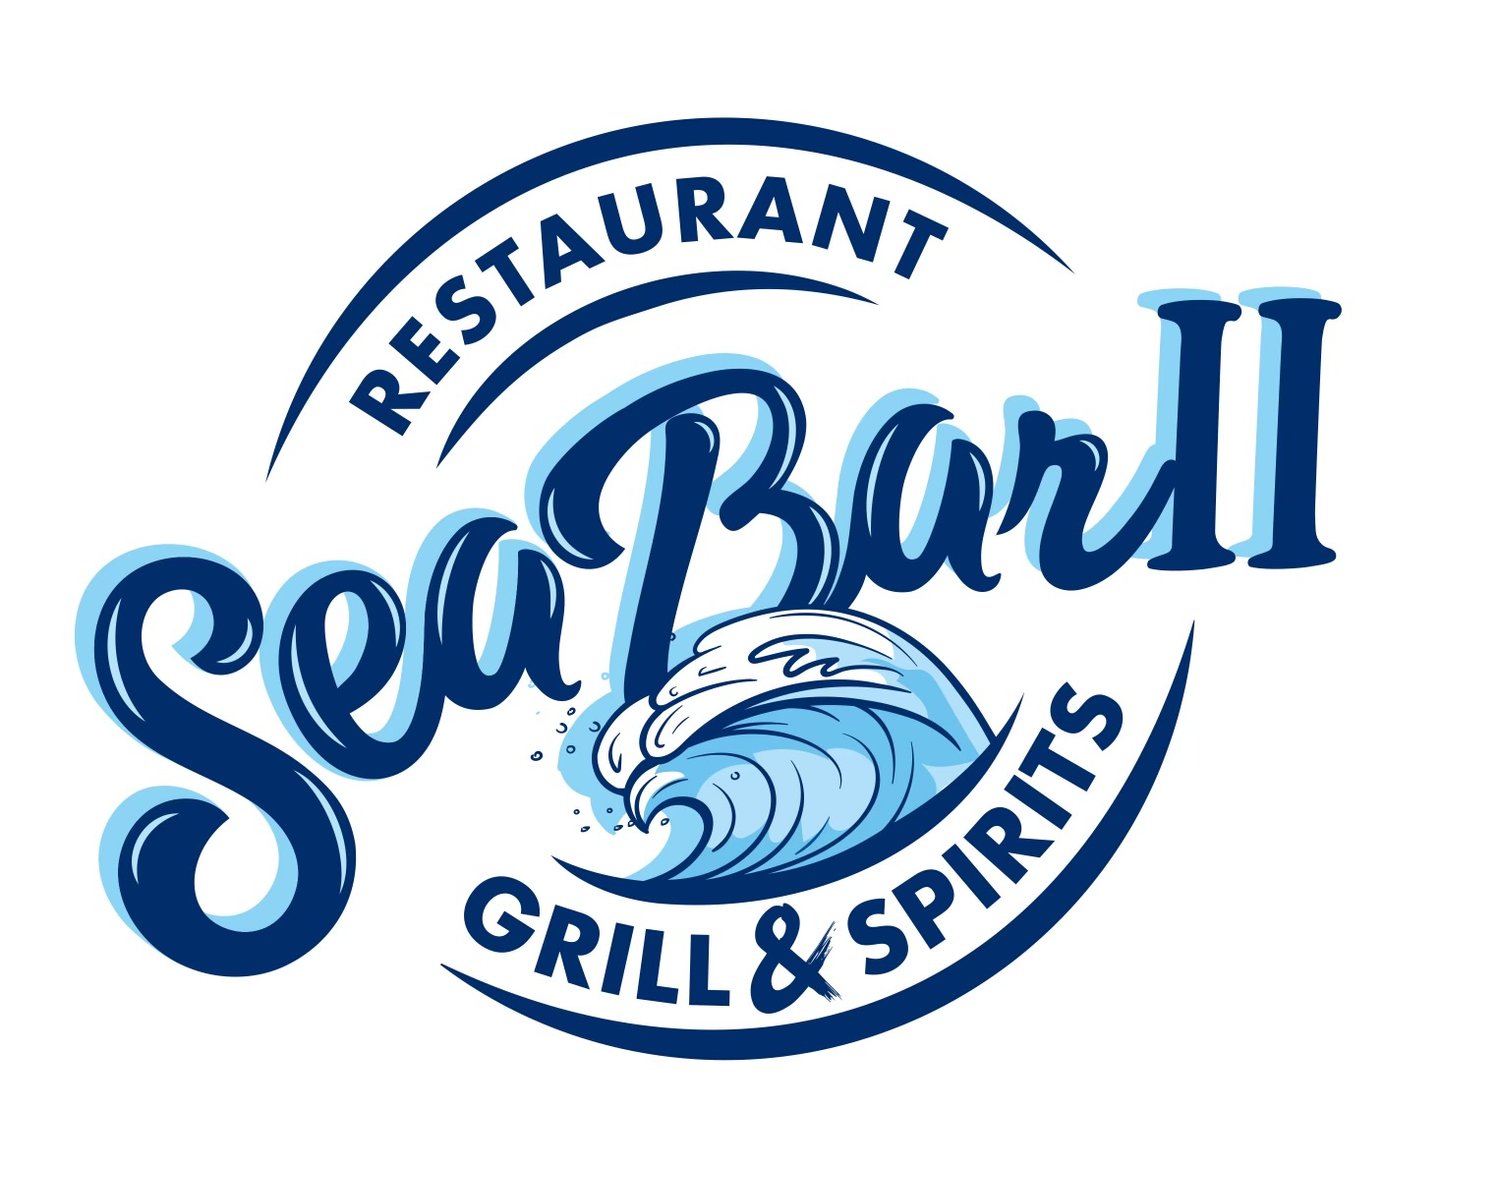 The Sea Bar